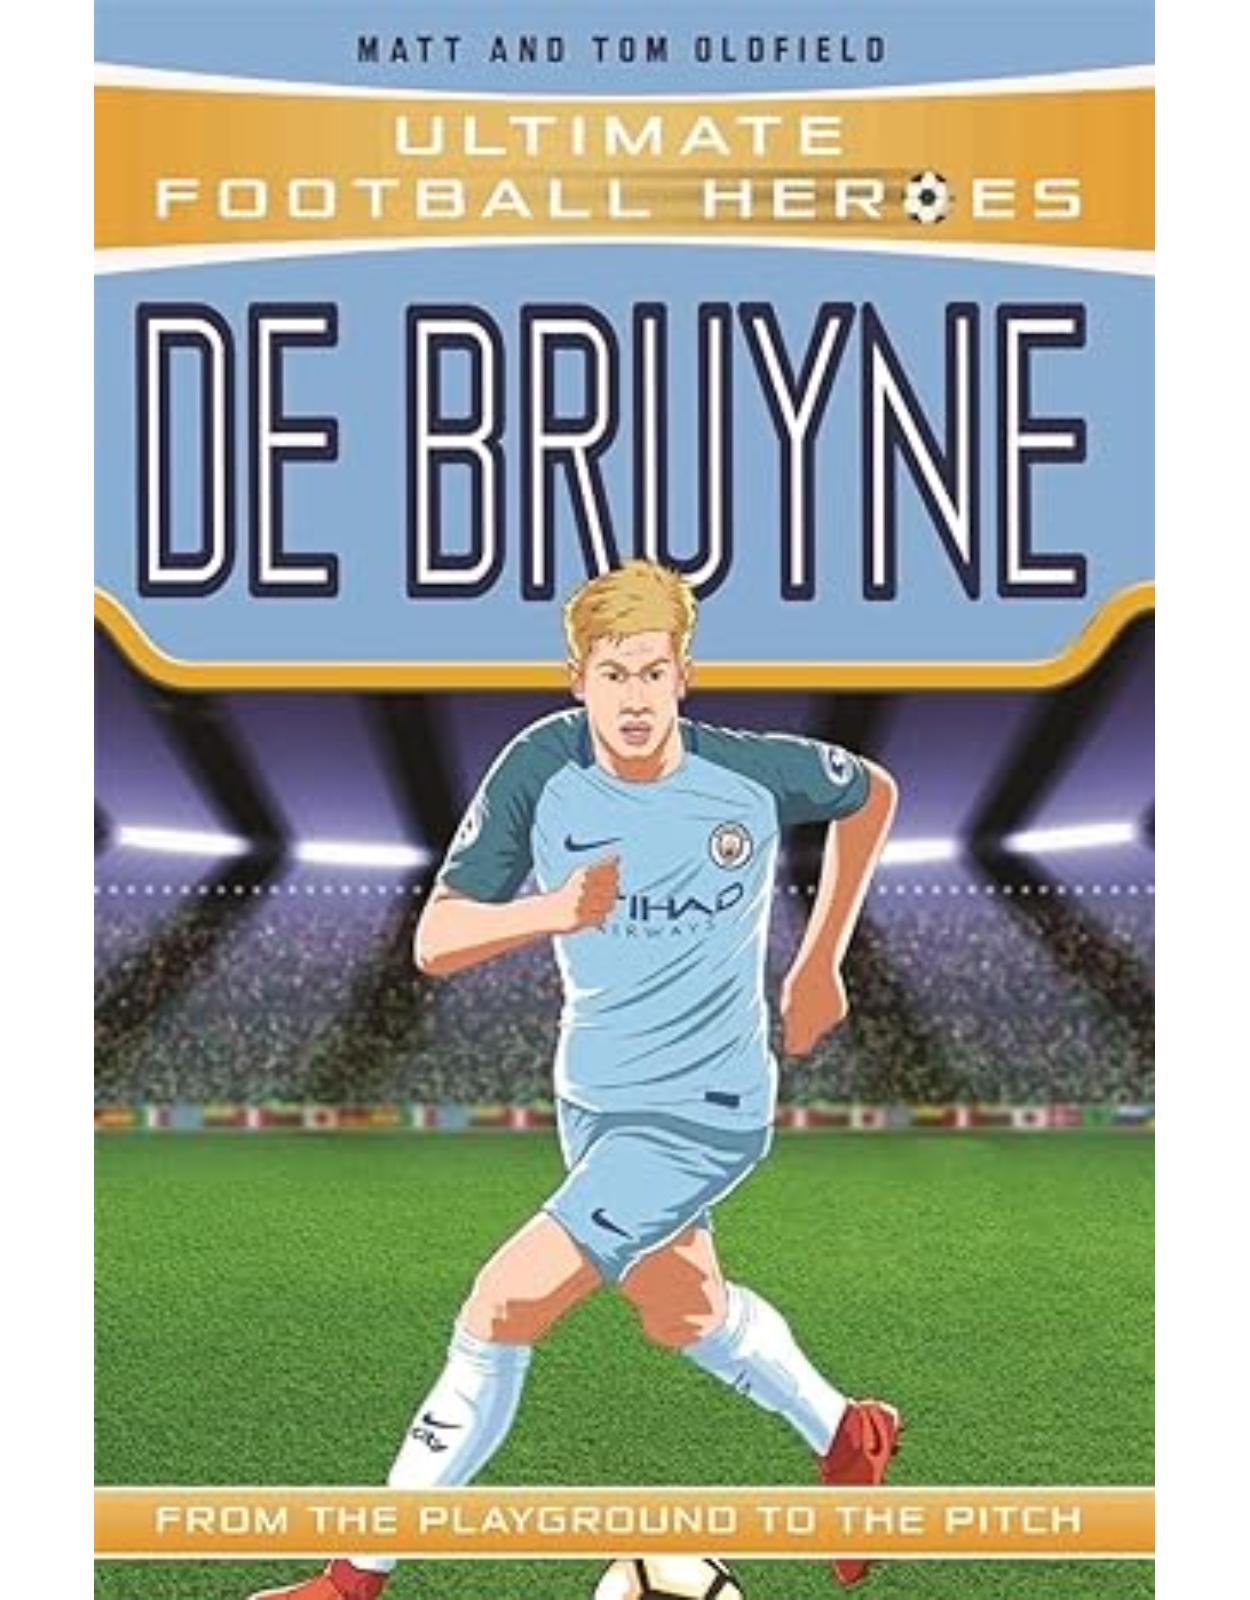 De Bruyne